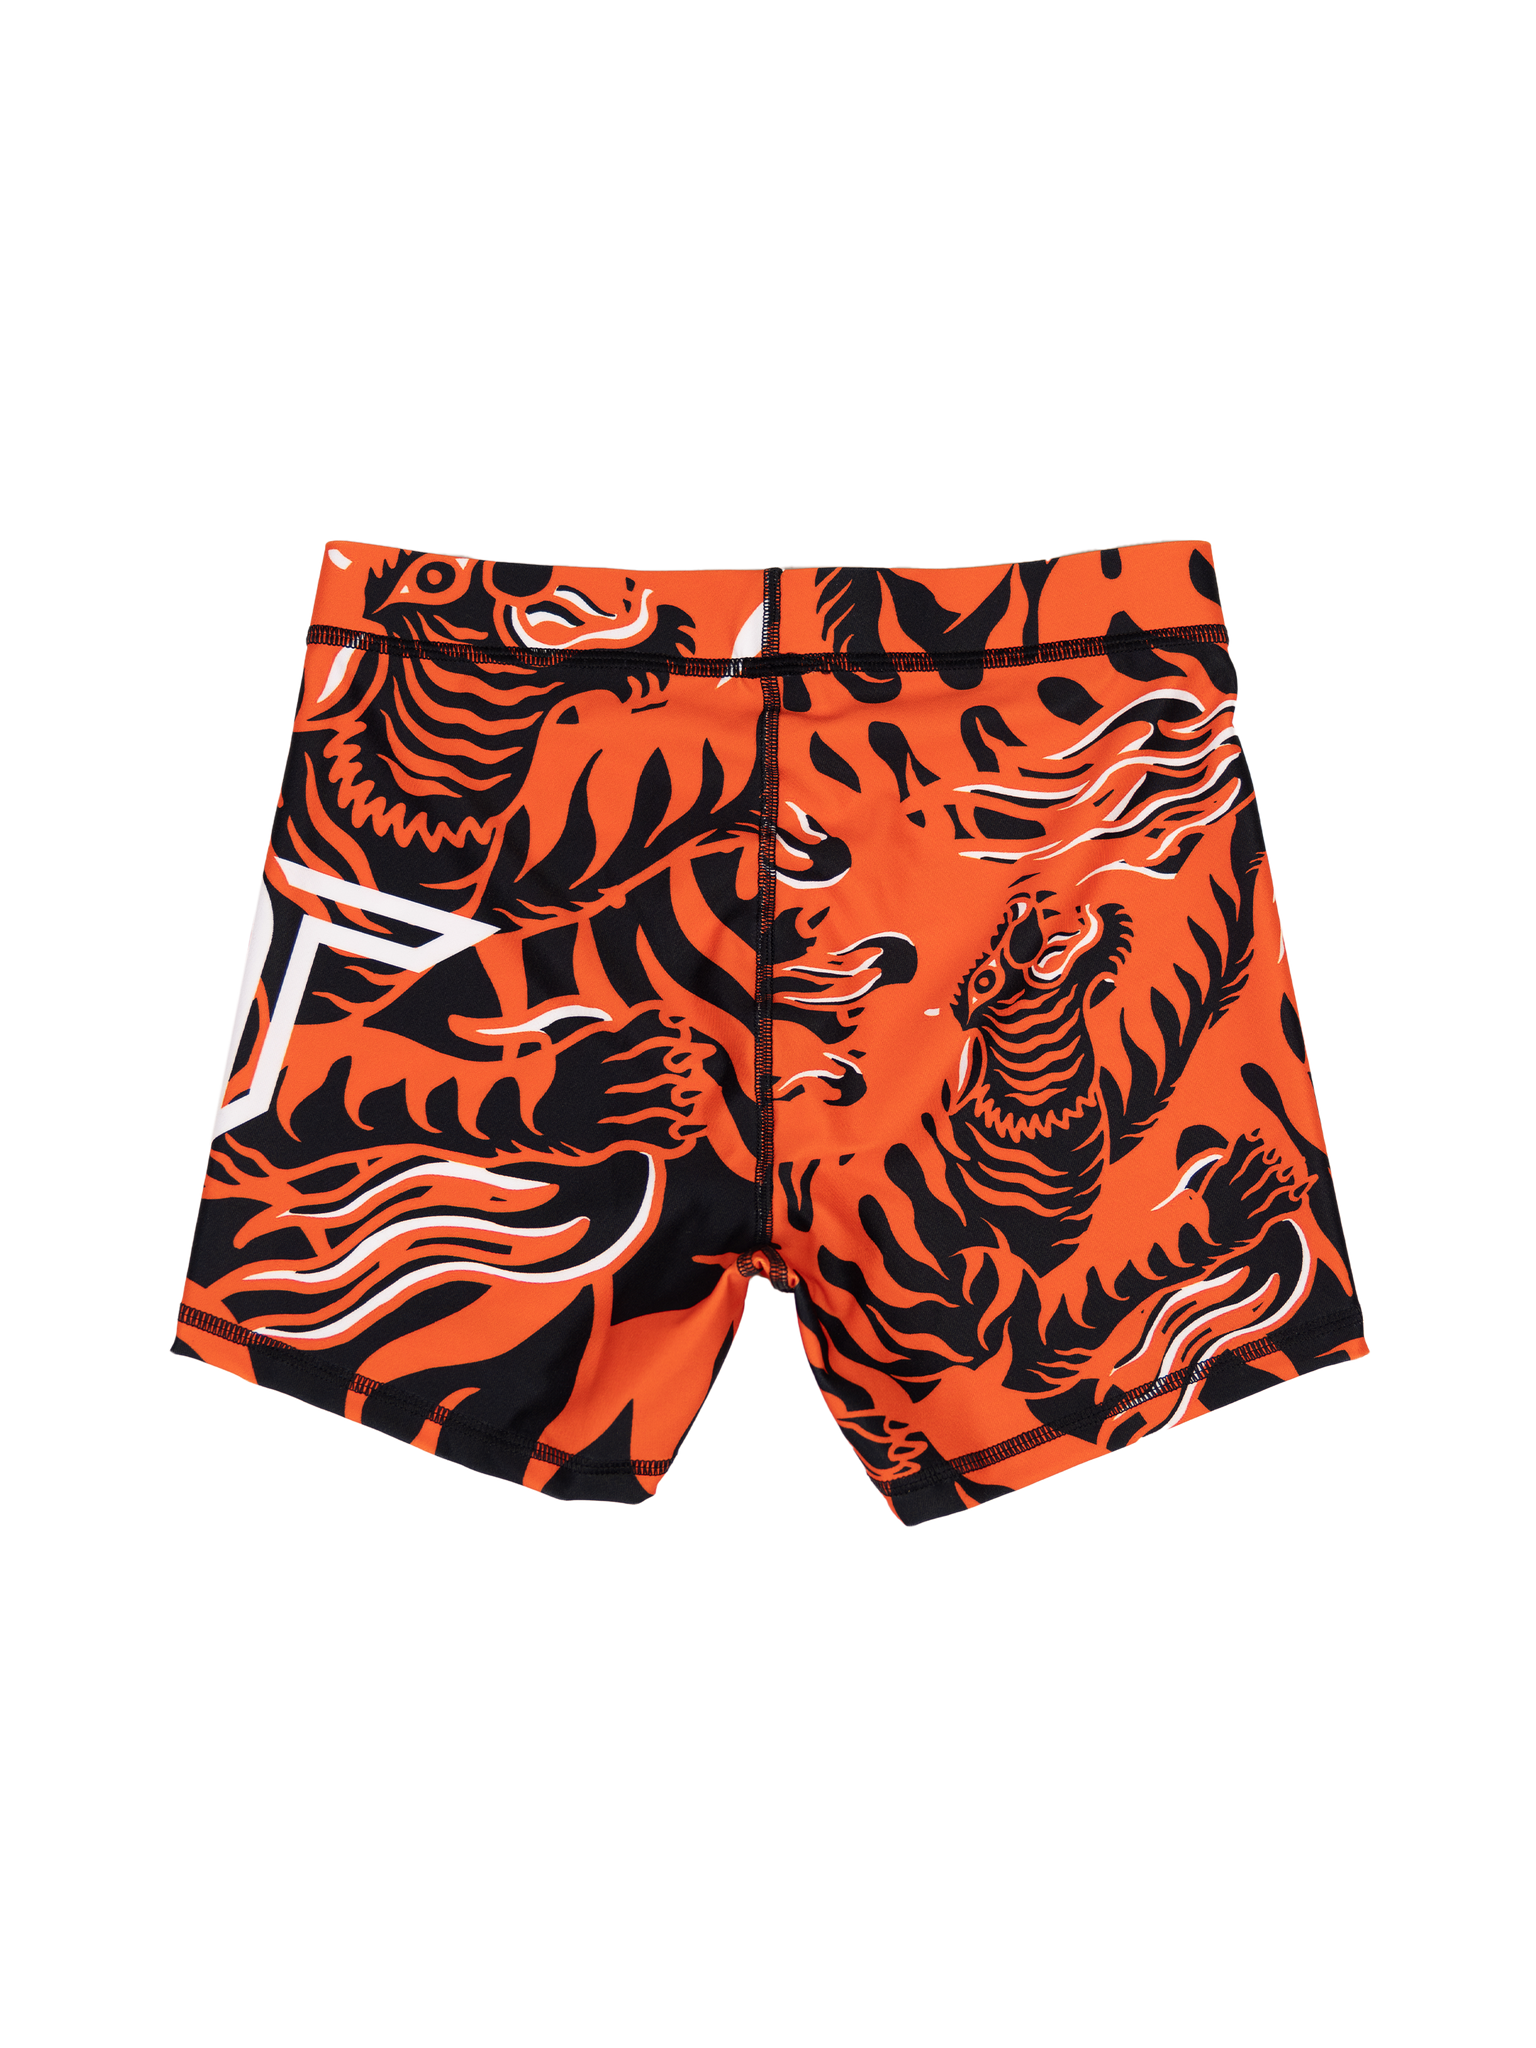 'Tiger Fight' Women's Compression Shorts - Caution Orange (4" Inseam)